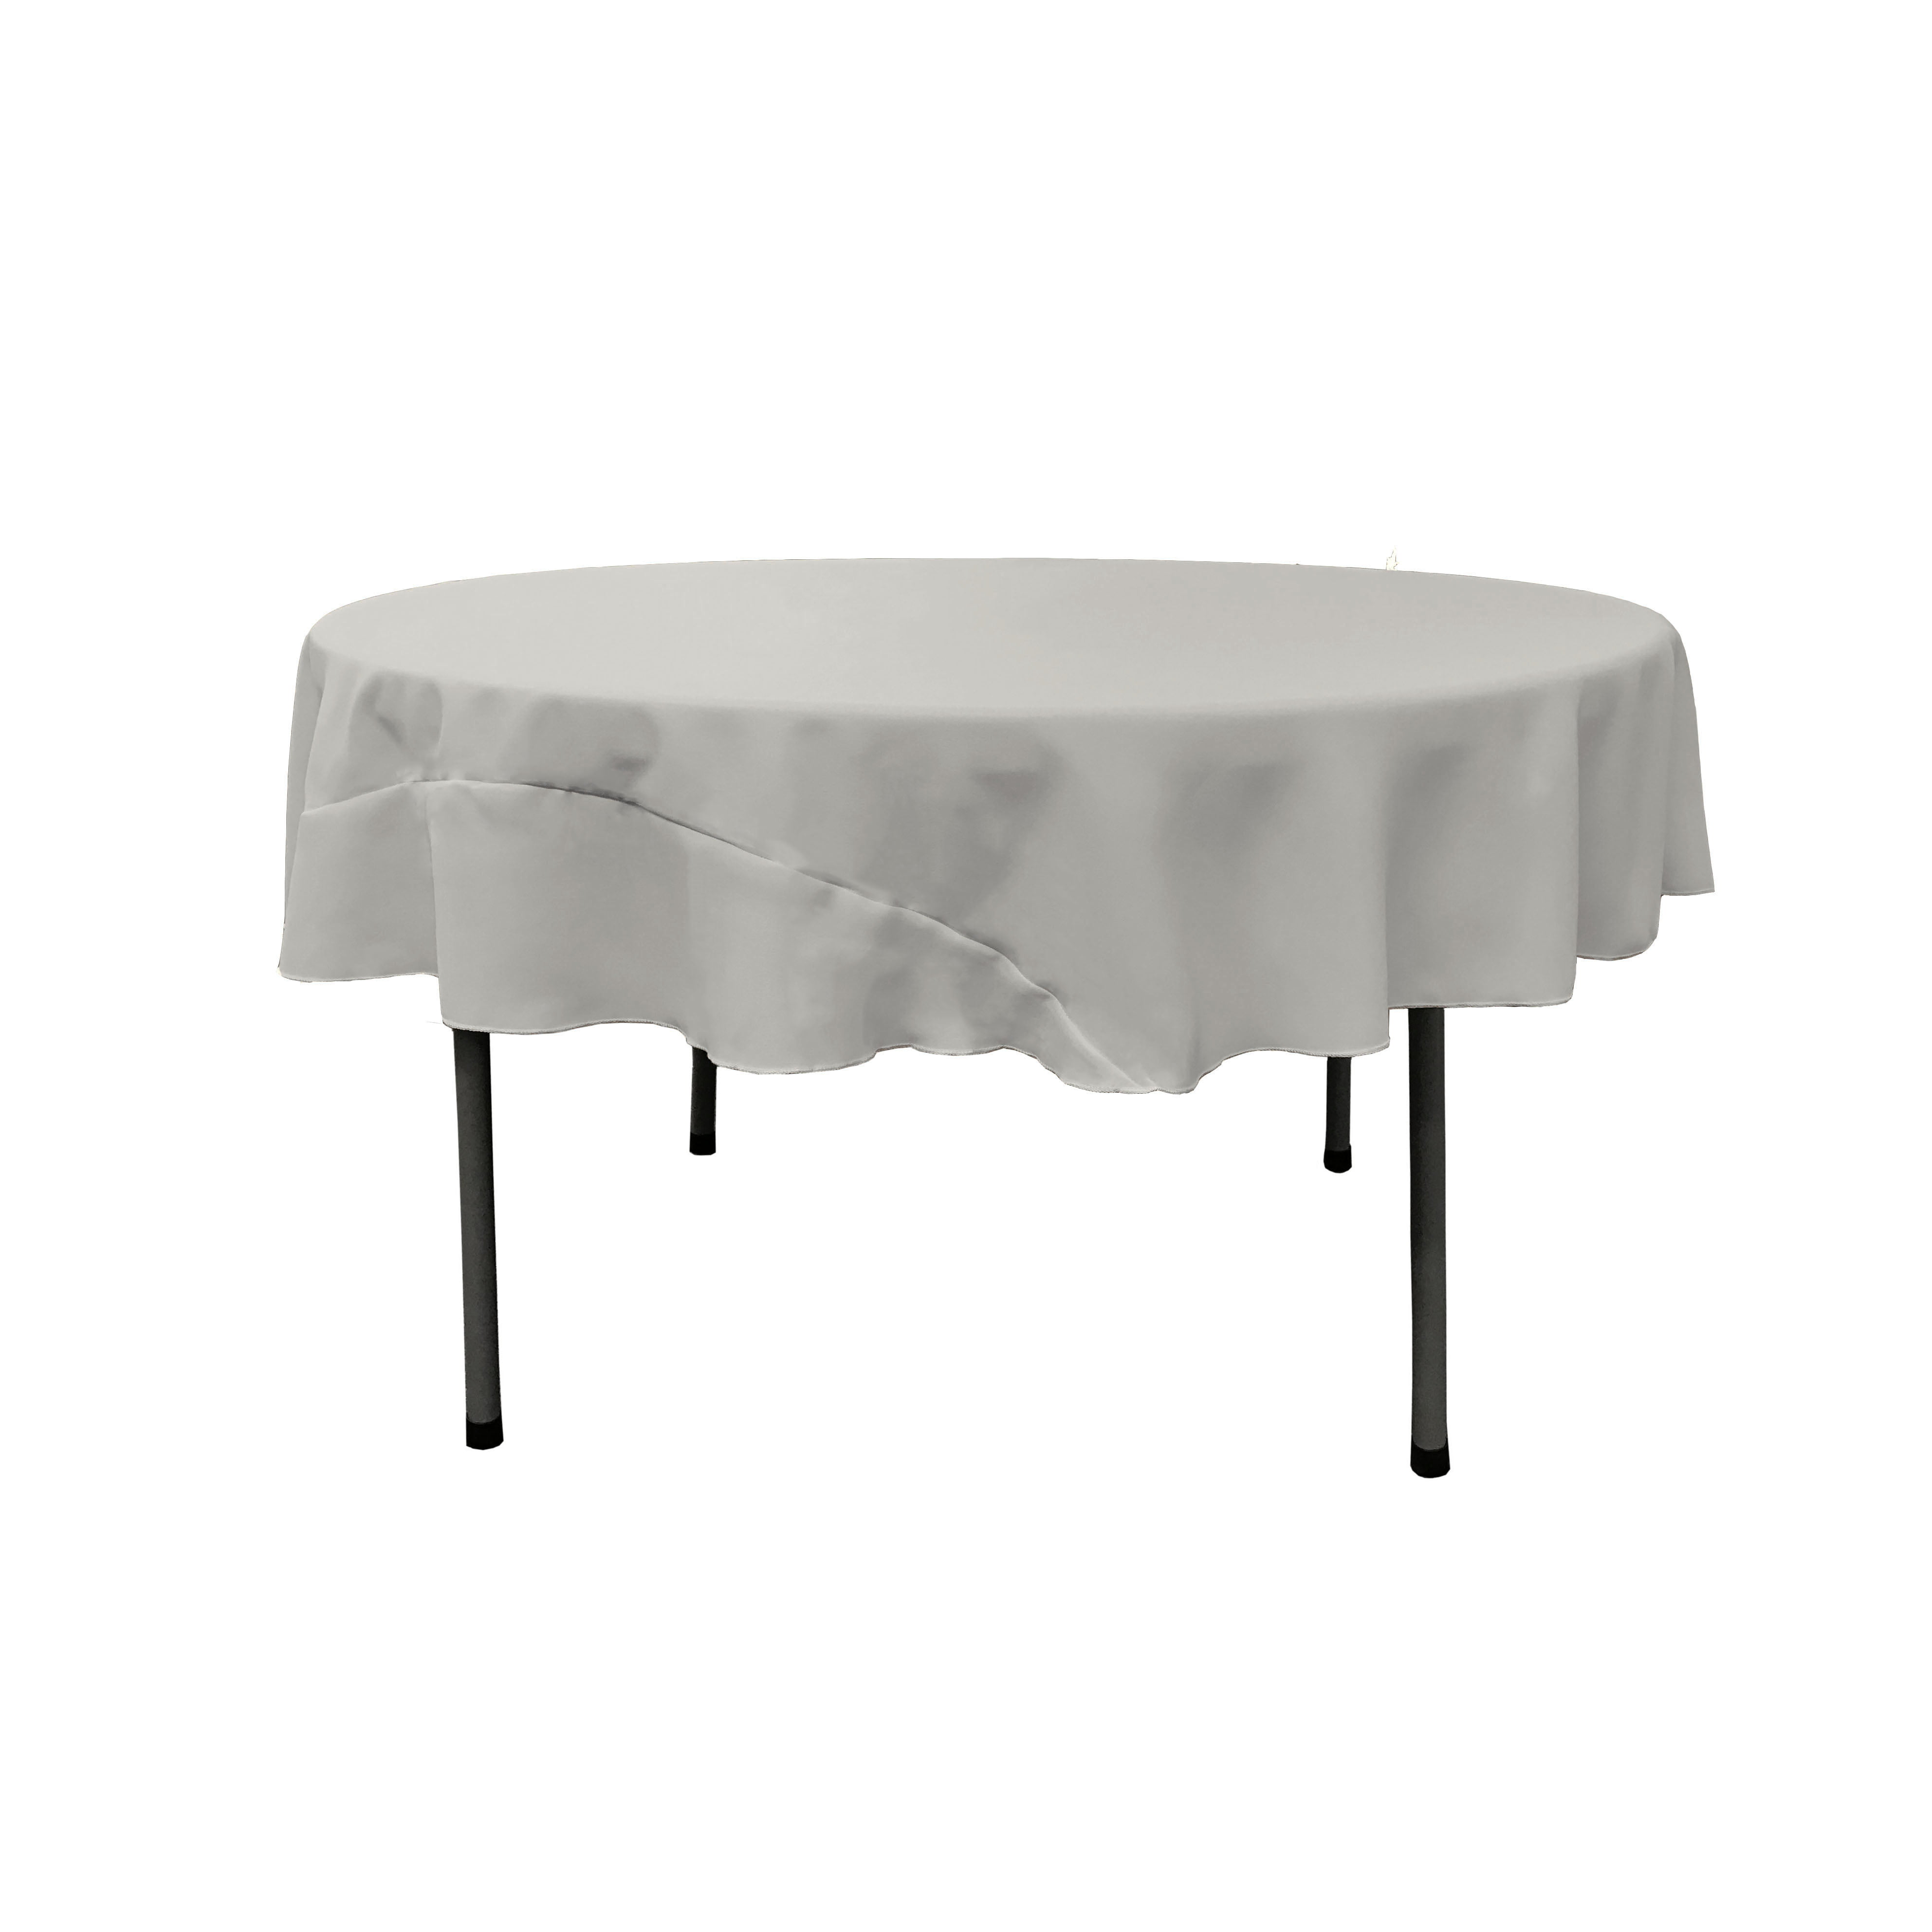 La Linen Polyester Poplin Tablecloth 72, 72 Round Table Linen